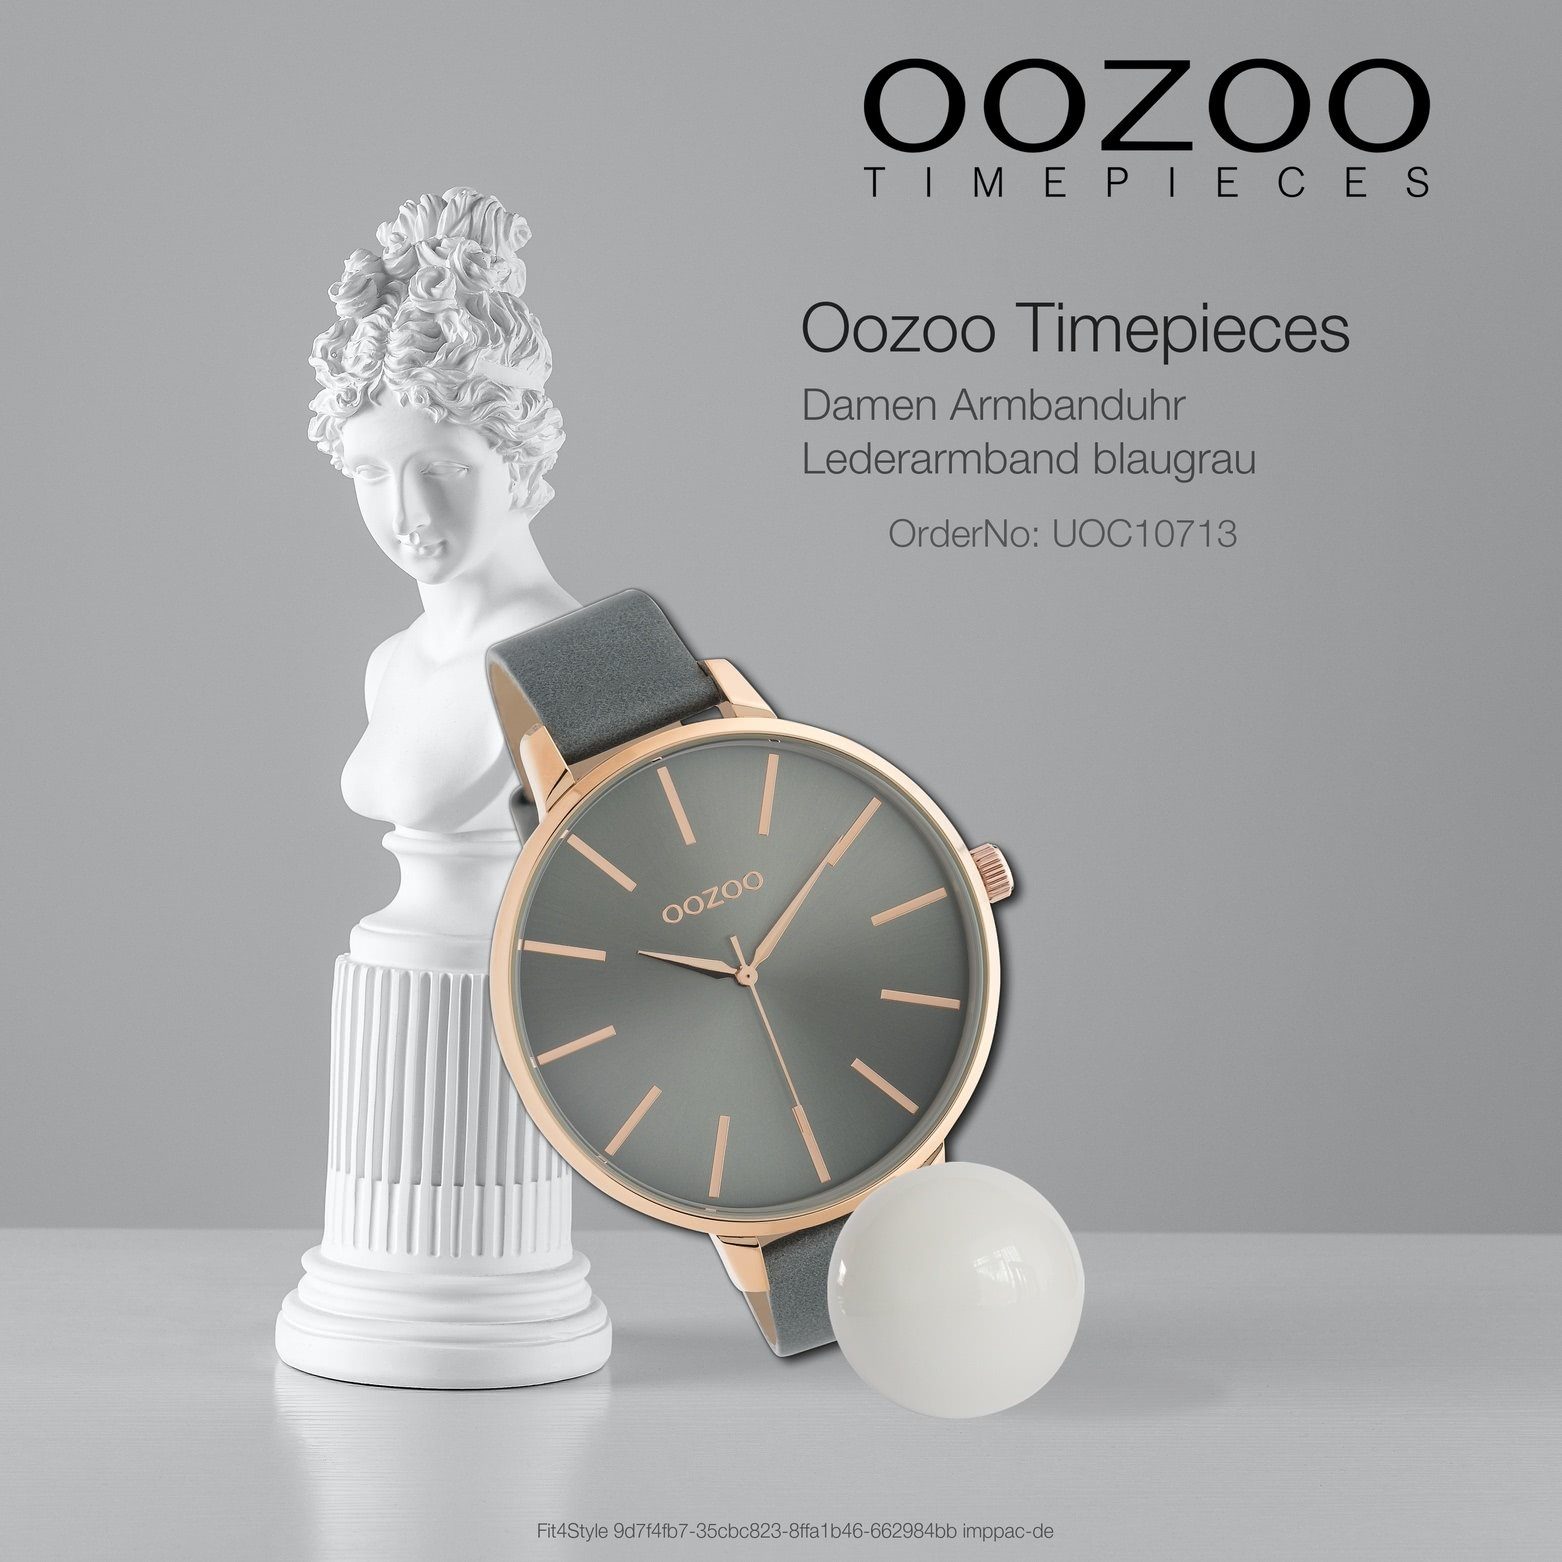 Oozoo blaugrau extra rund, Lederarmband, Damenuhr Quarzuhr (ca. groß Fashion-Style Analog, 48mm) Armbanduhr OOZOO Damen